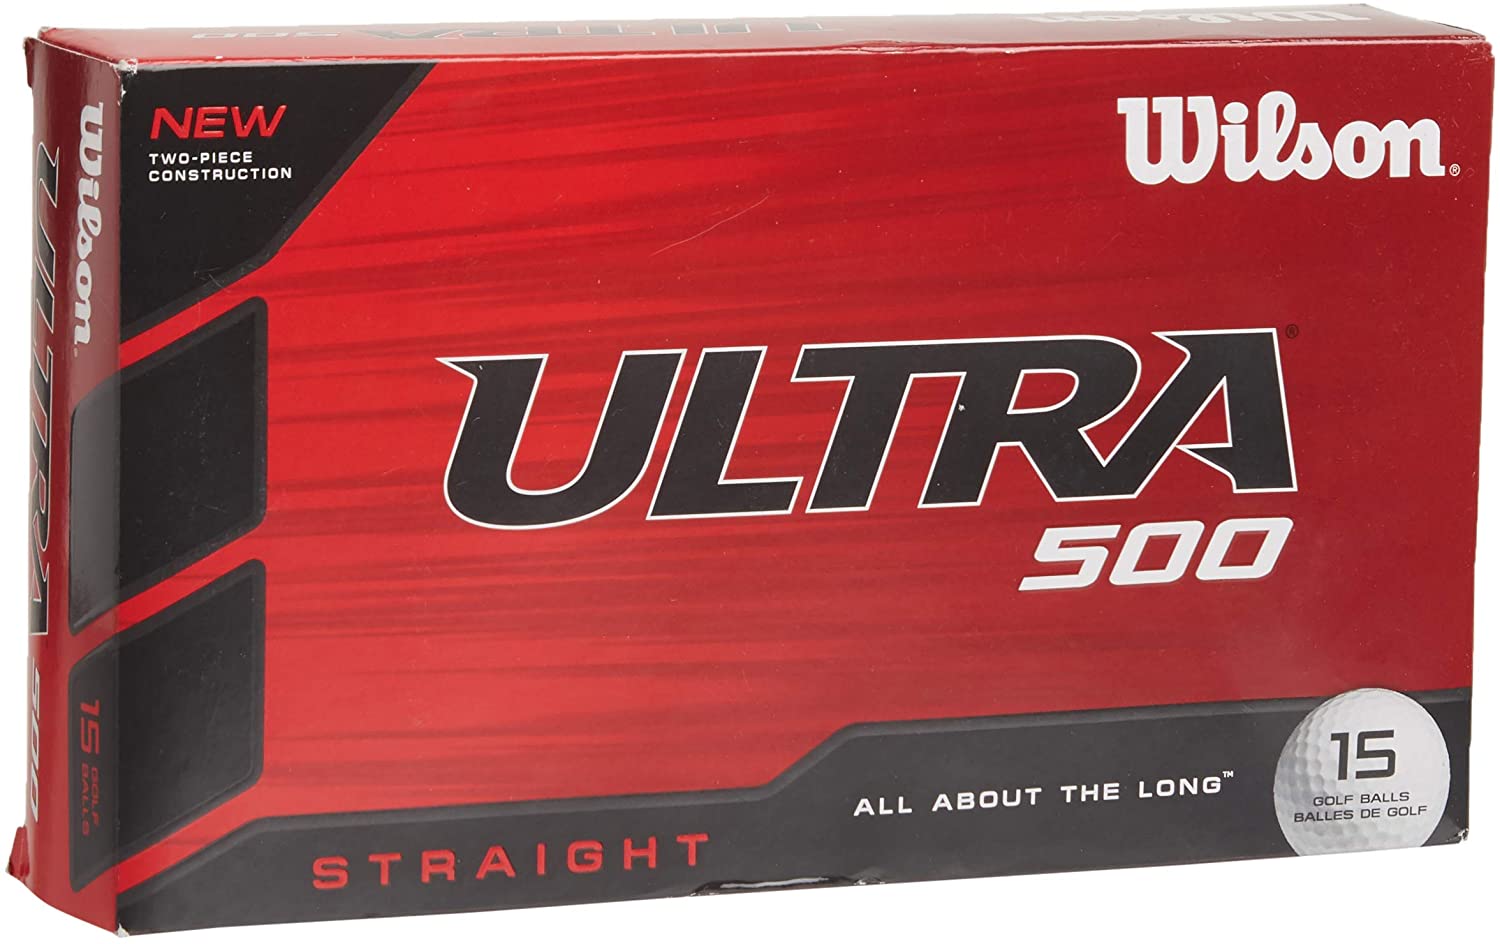 "Wilson Ultra 500